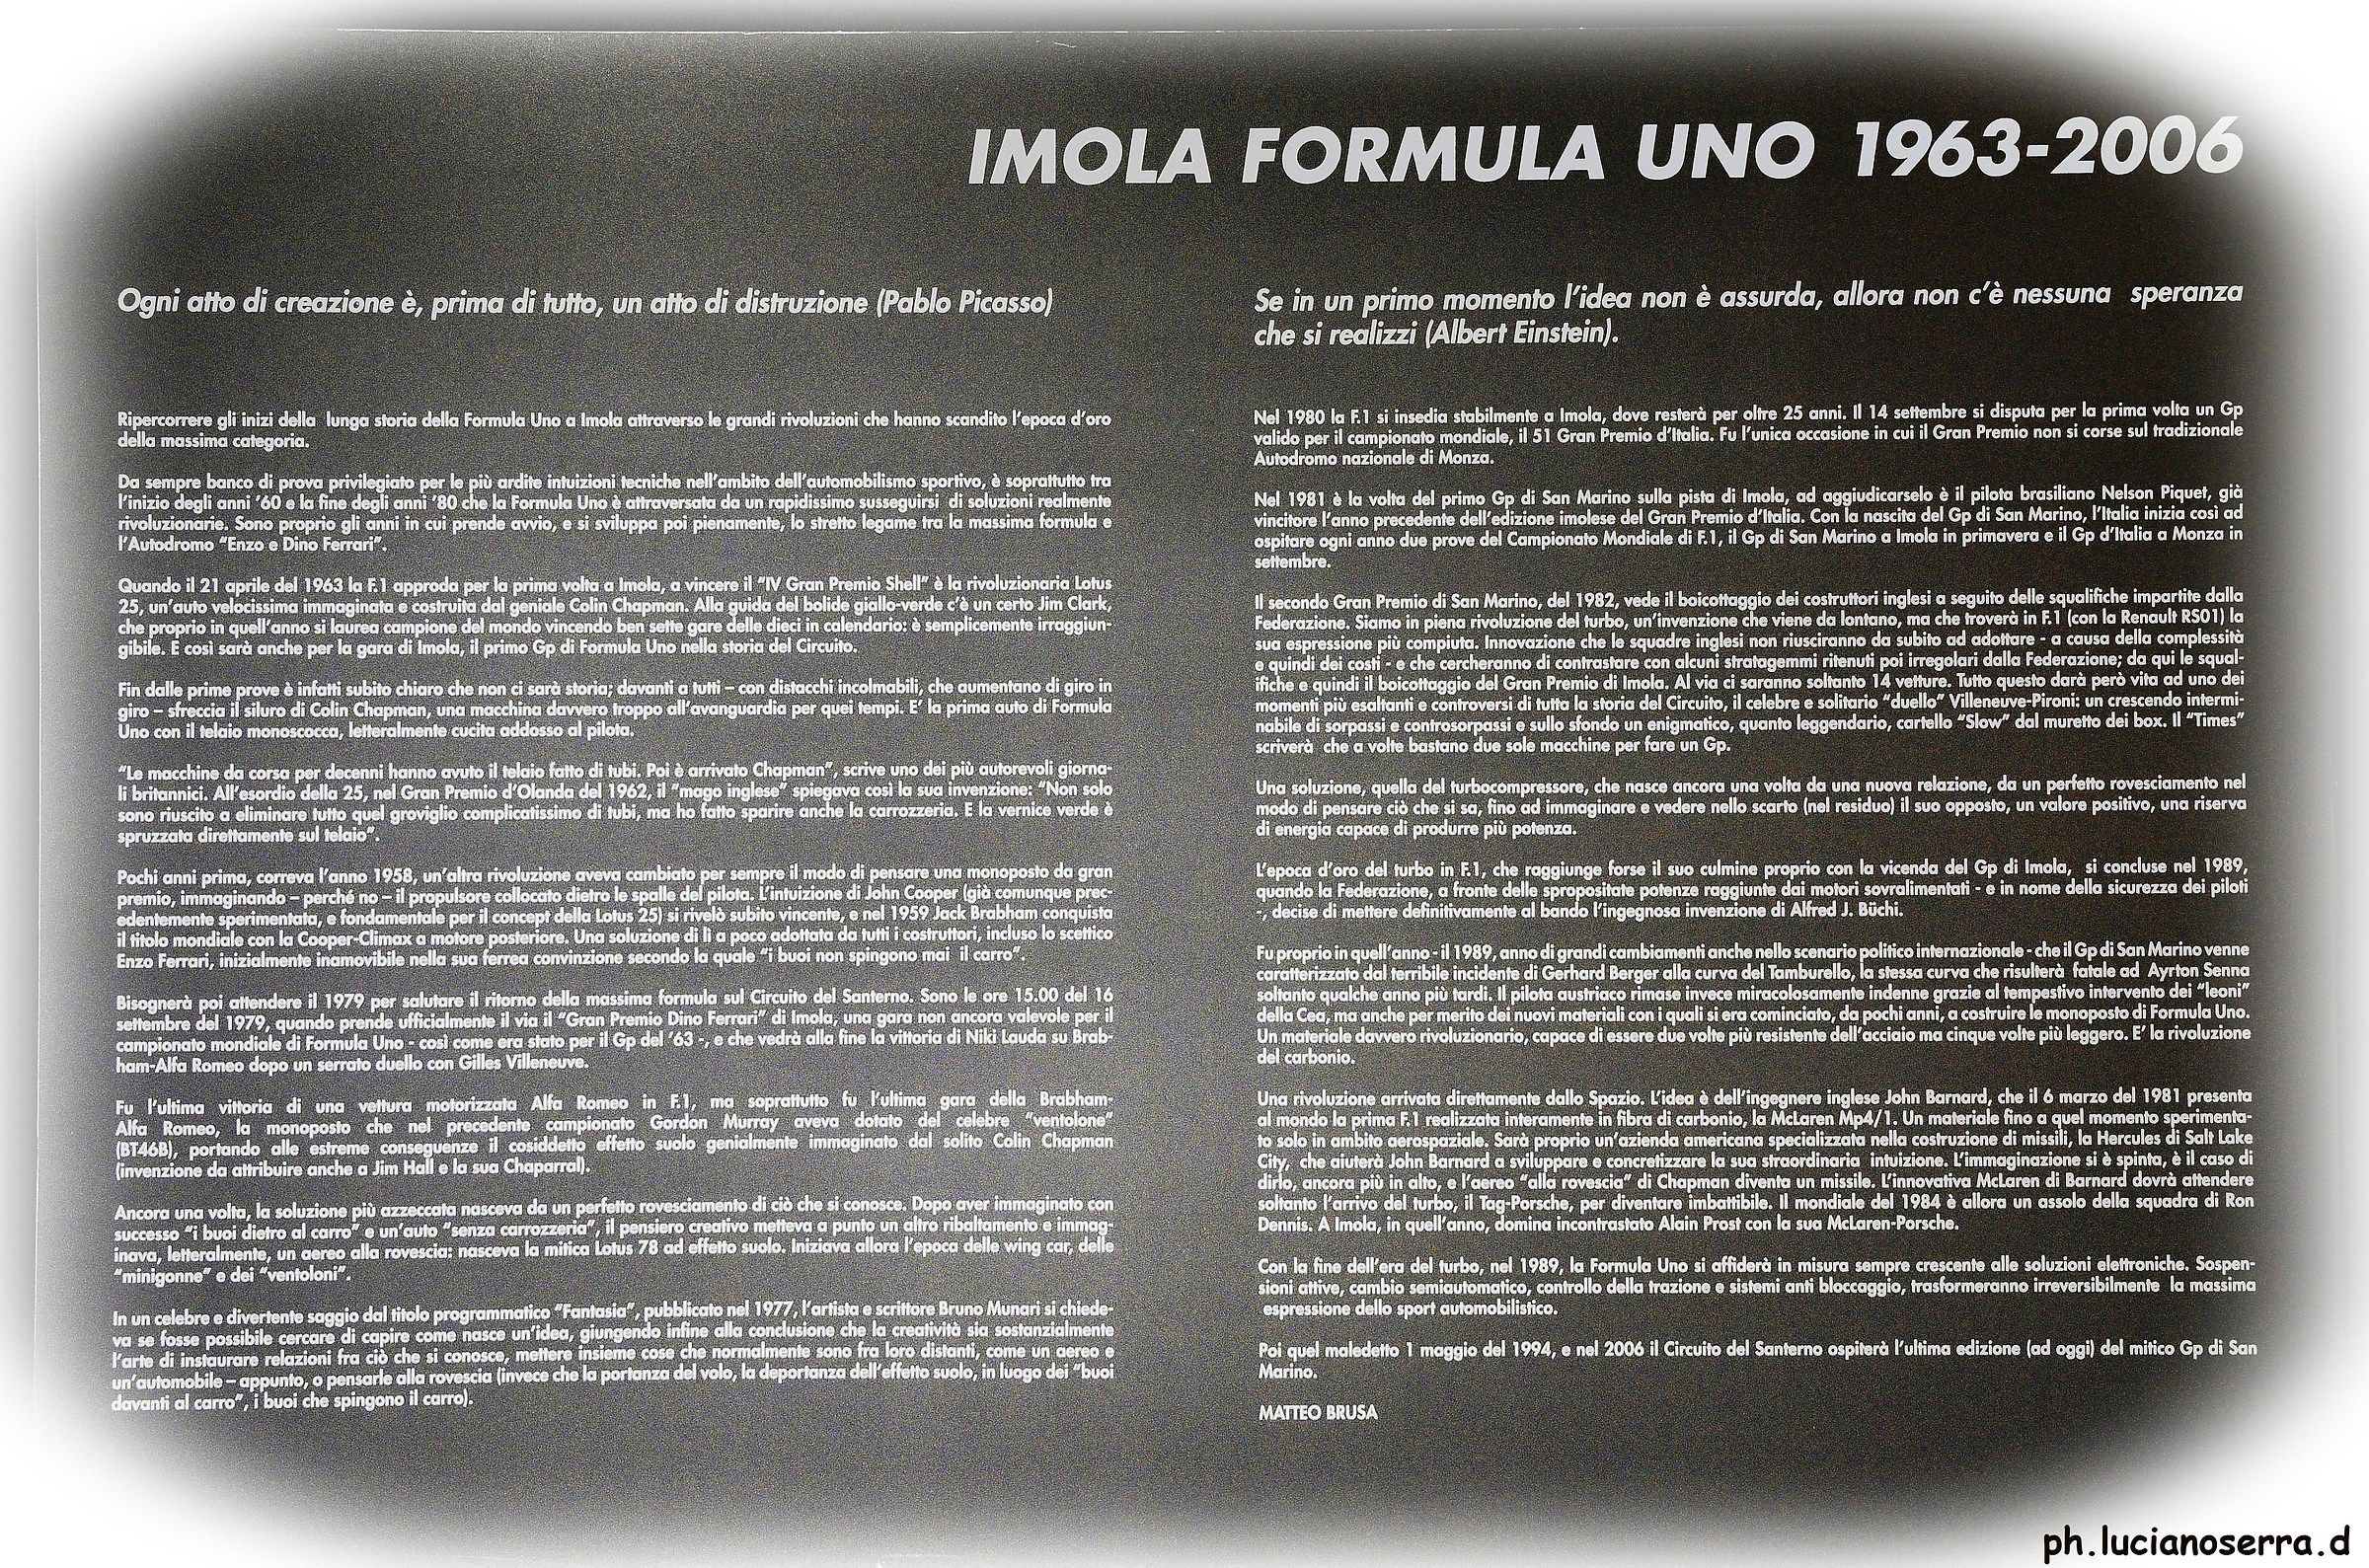 Presentation of Imola Formula One 1963-2006...